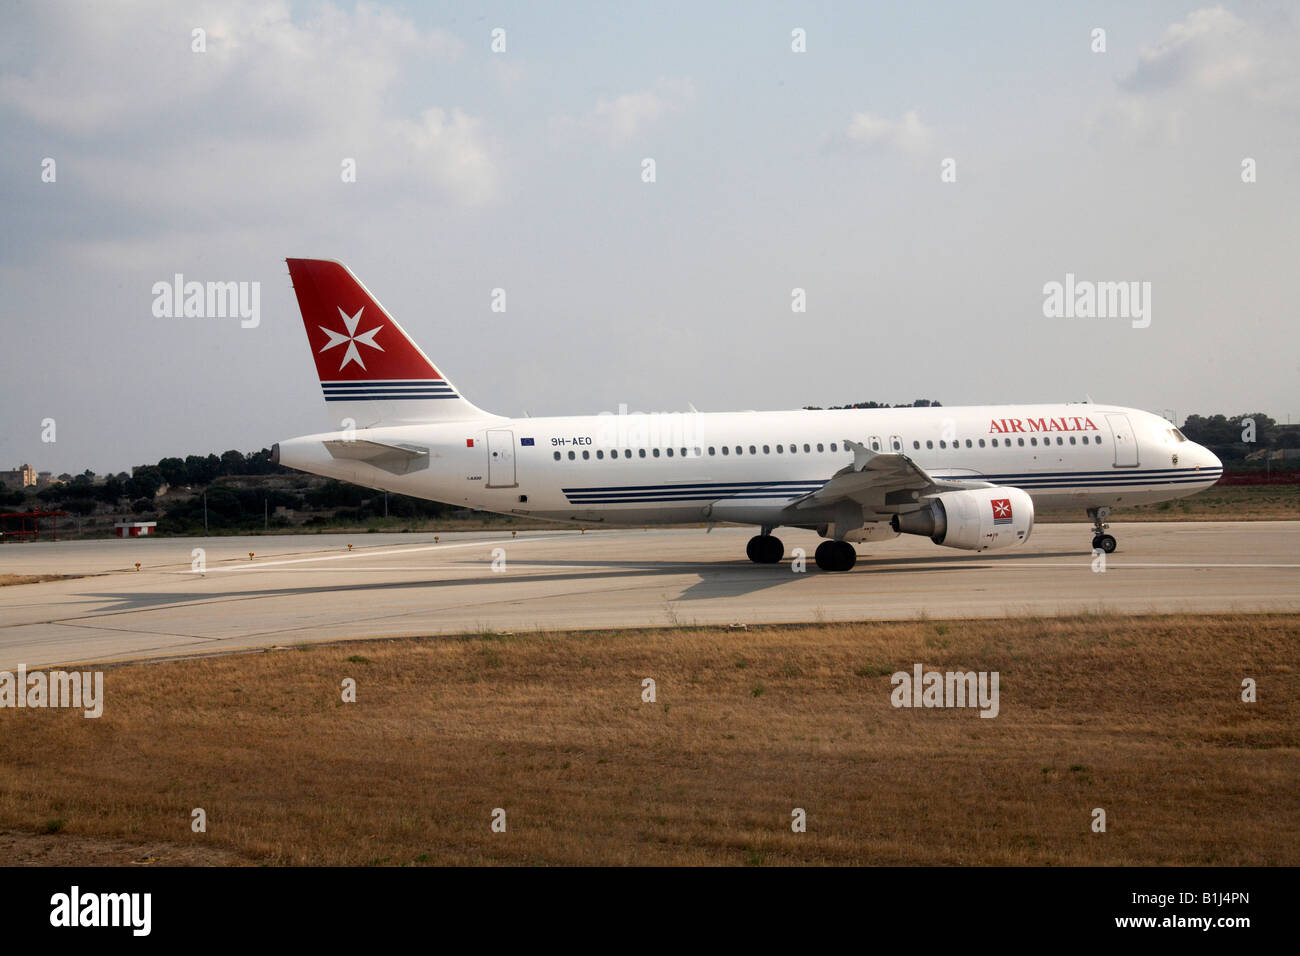 Air Malta Airbus A320 214 aircraft taxiing on taxiway at Malta International Airport Stock Photo